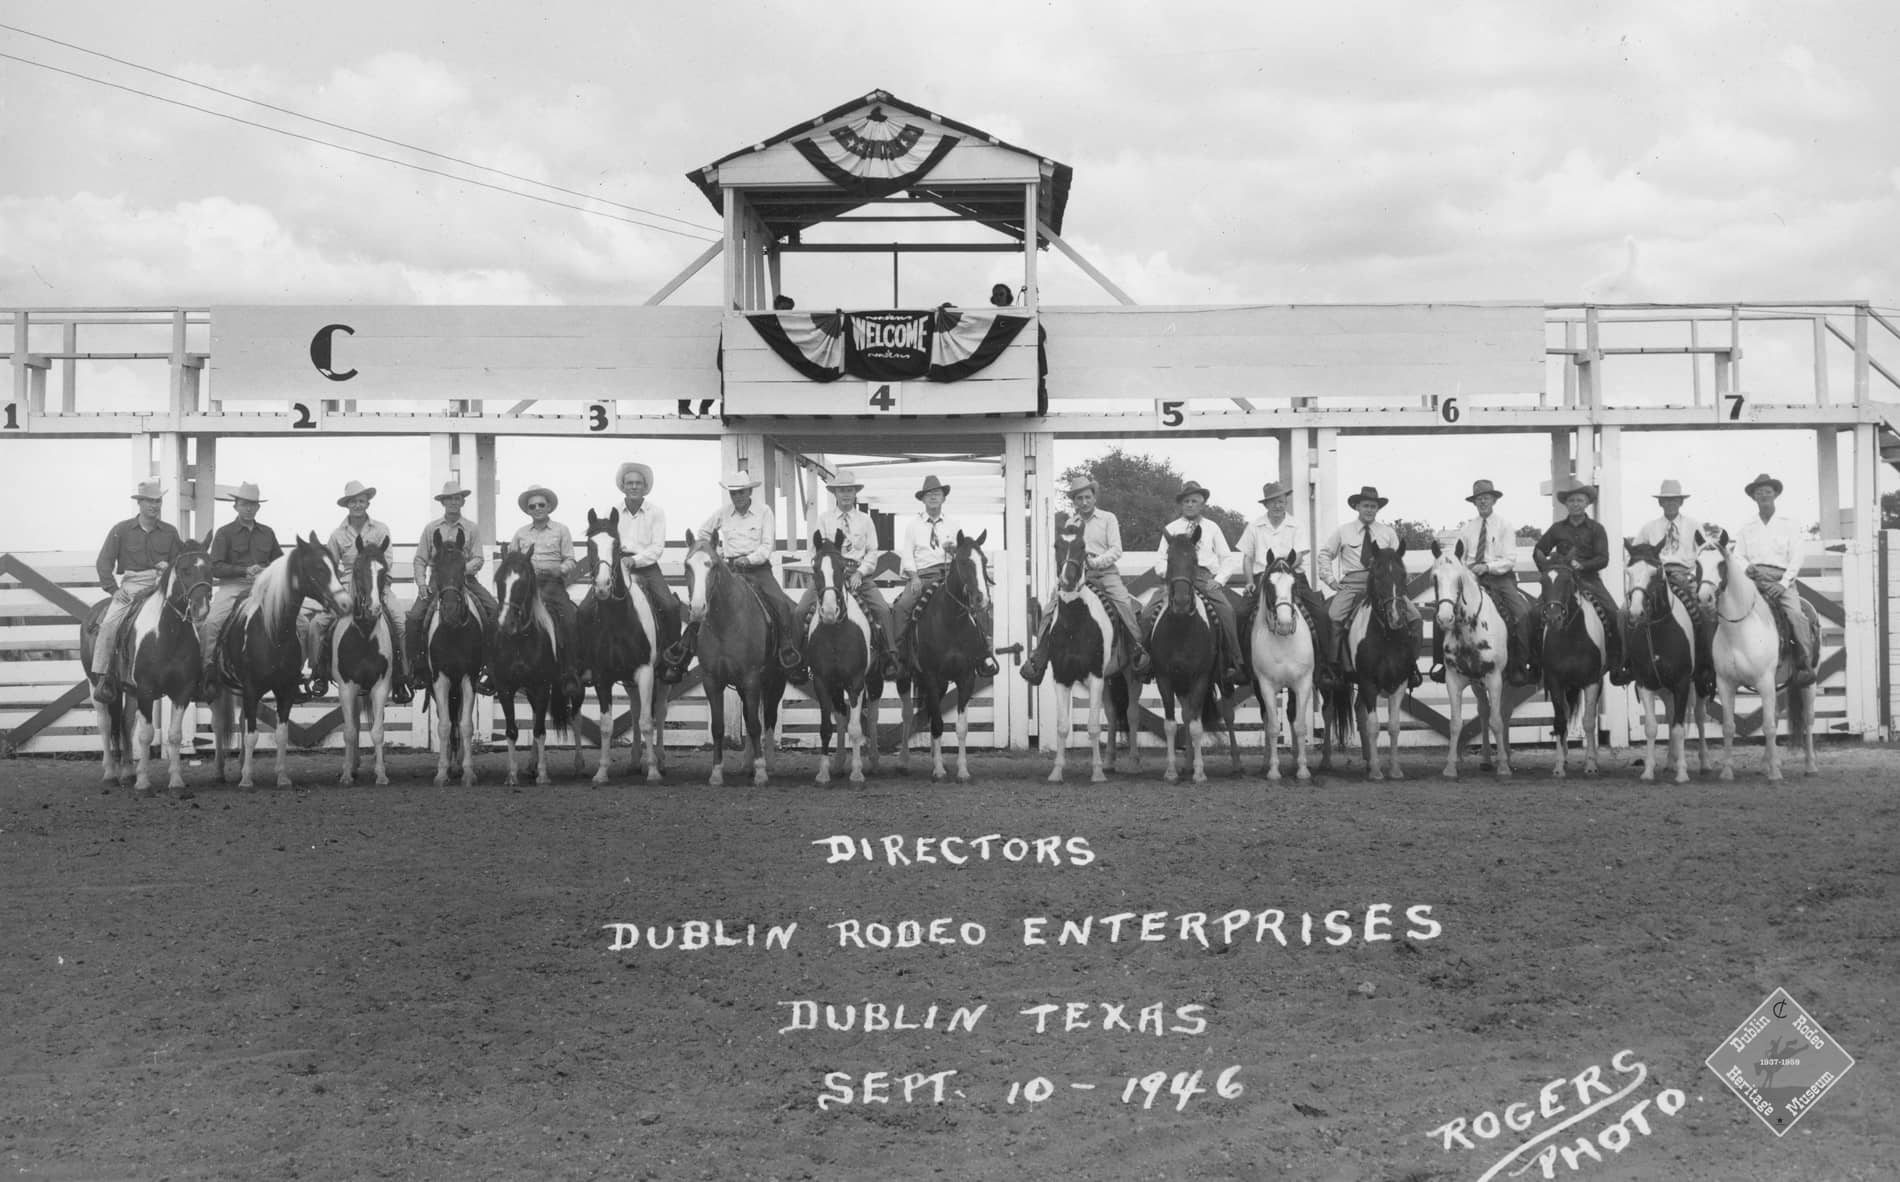 Dublin Rodeo Enterprises Directors Image